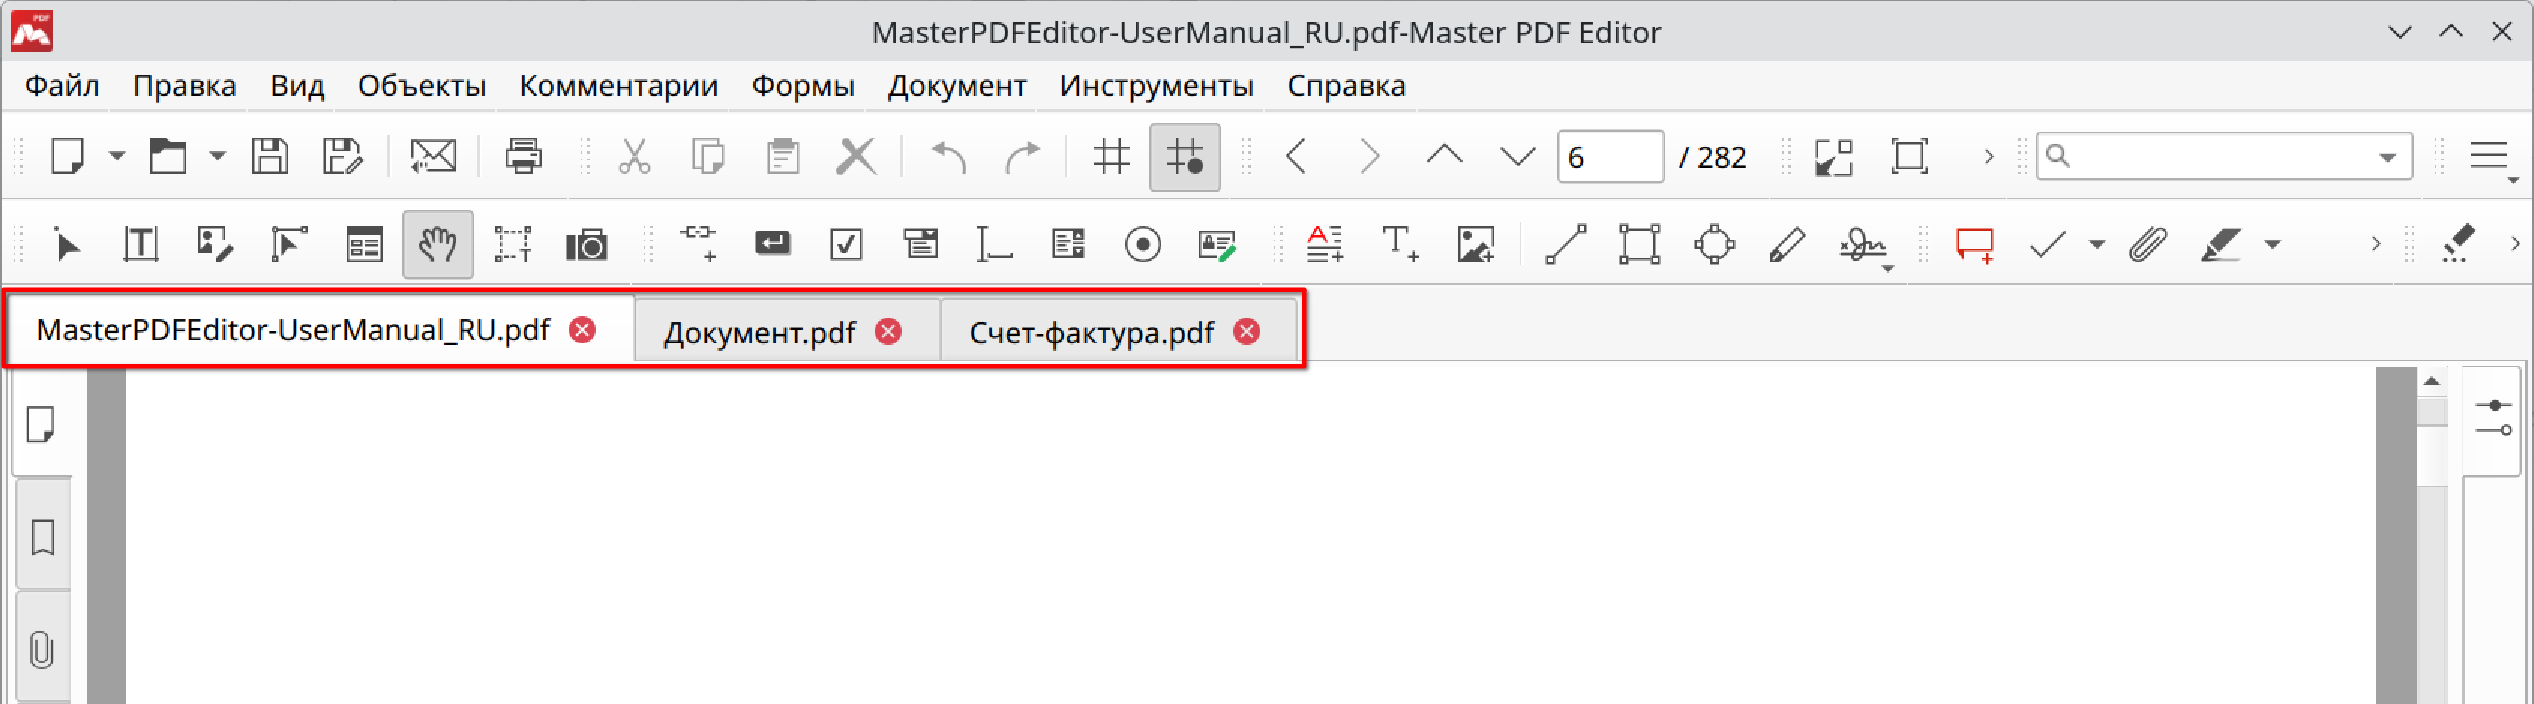 Вкладки с документами в Master PDF Editor